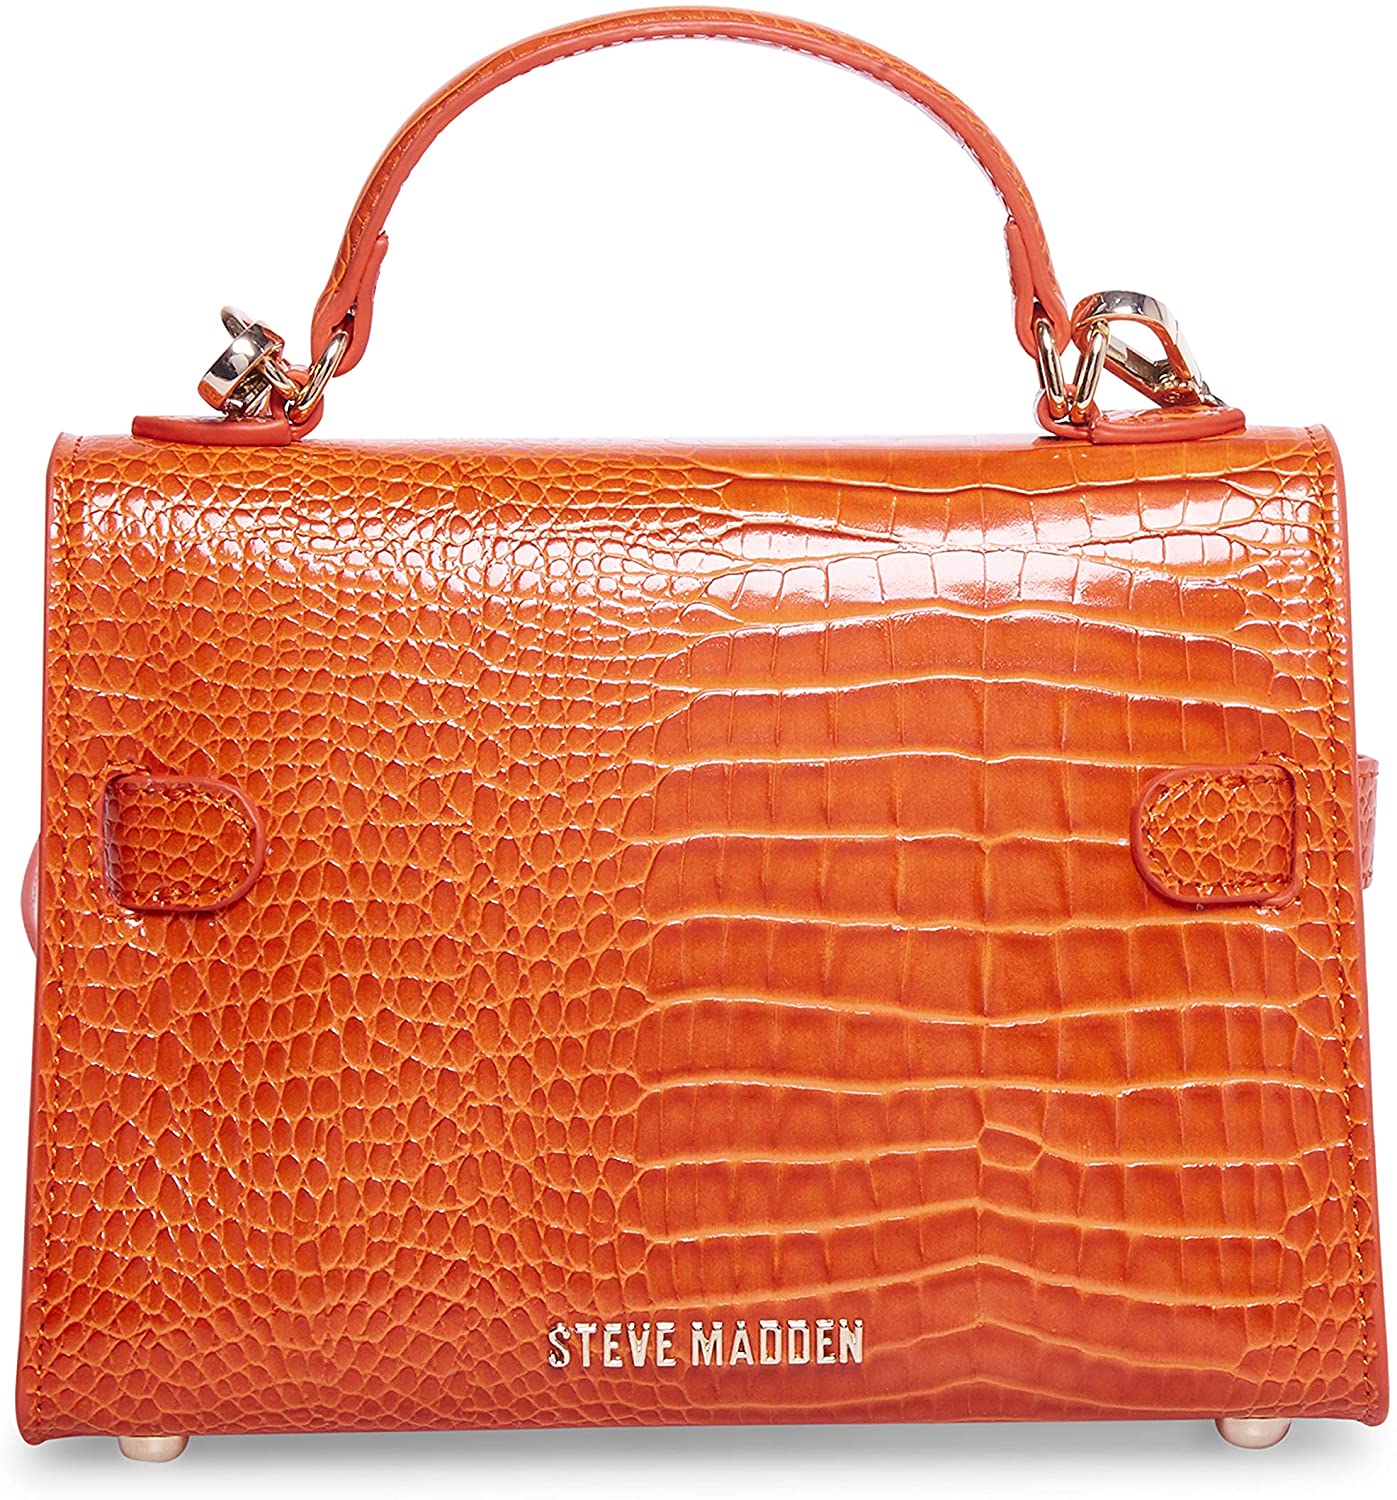 Steve Madden Steve Mdden Dignify Croco Top Handle Bag | eBay